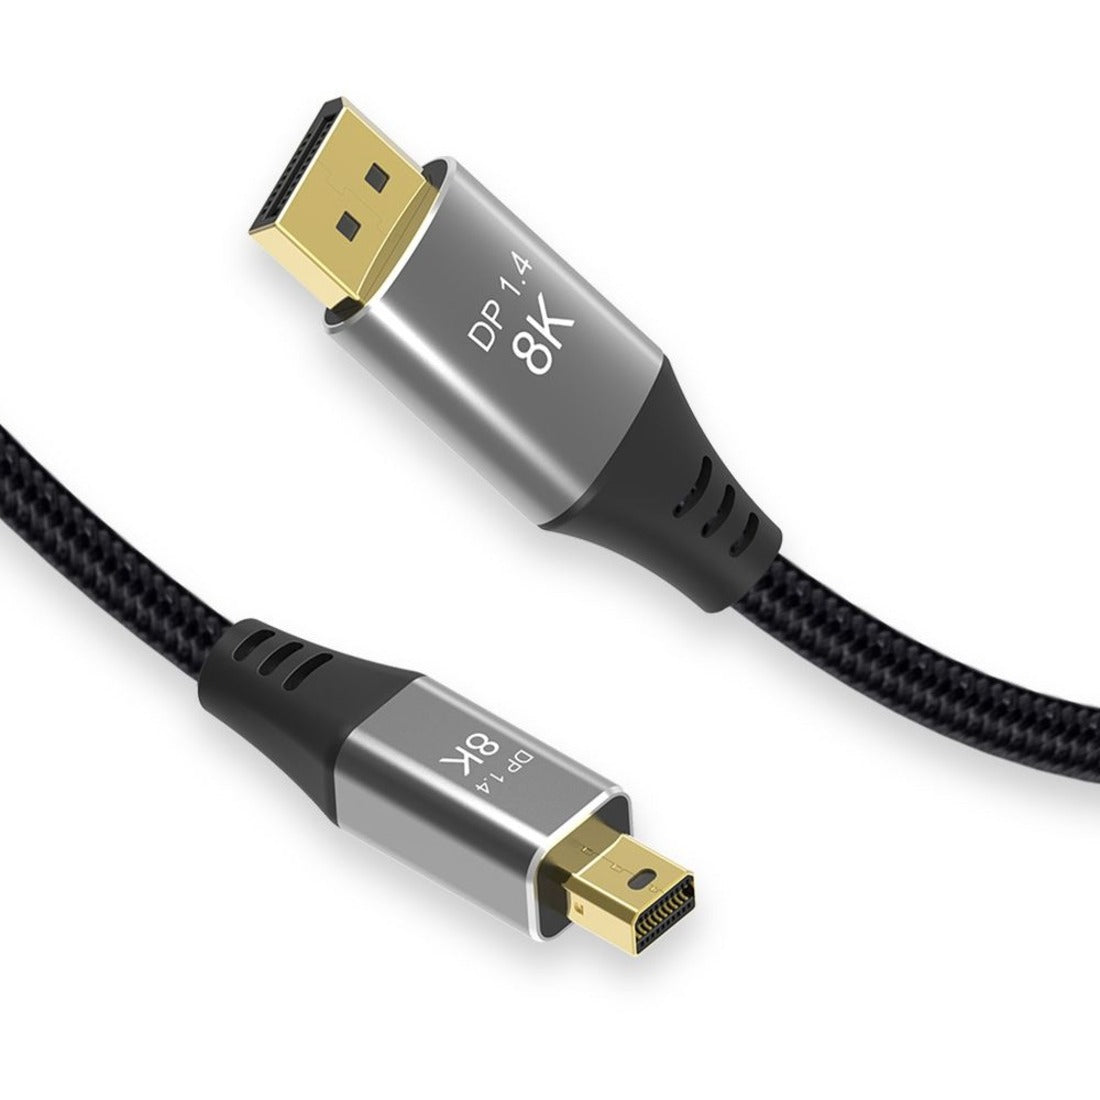 4XEM 4XAP049A2M 2M 8K and 4K Mini DisplayPort to DisplayPort Cable, High-Speed Data Transfer